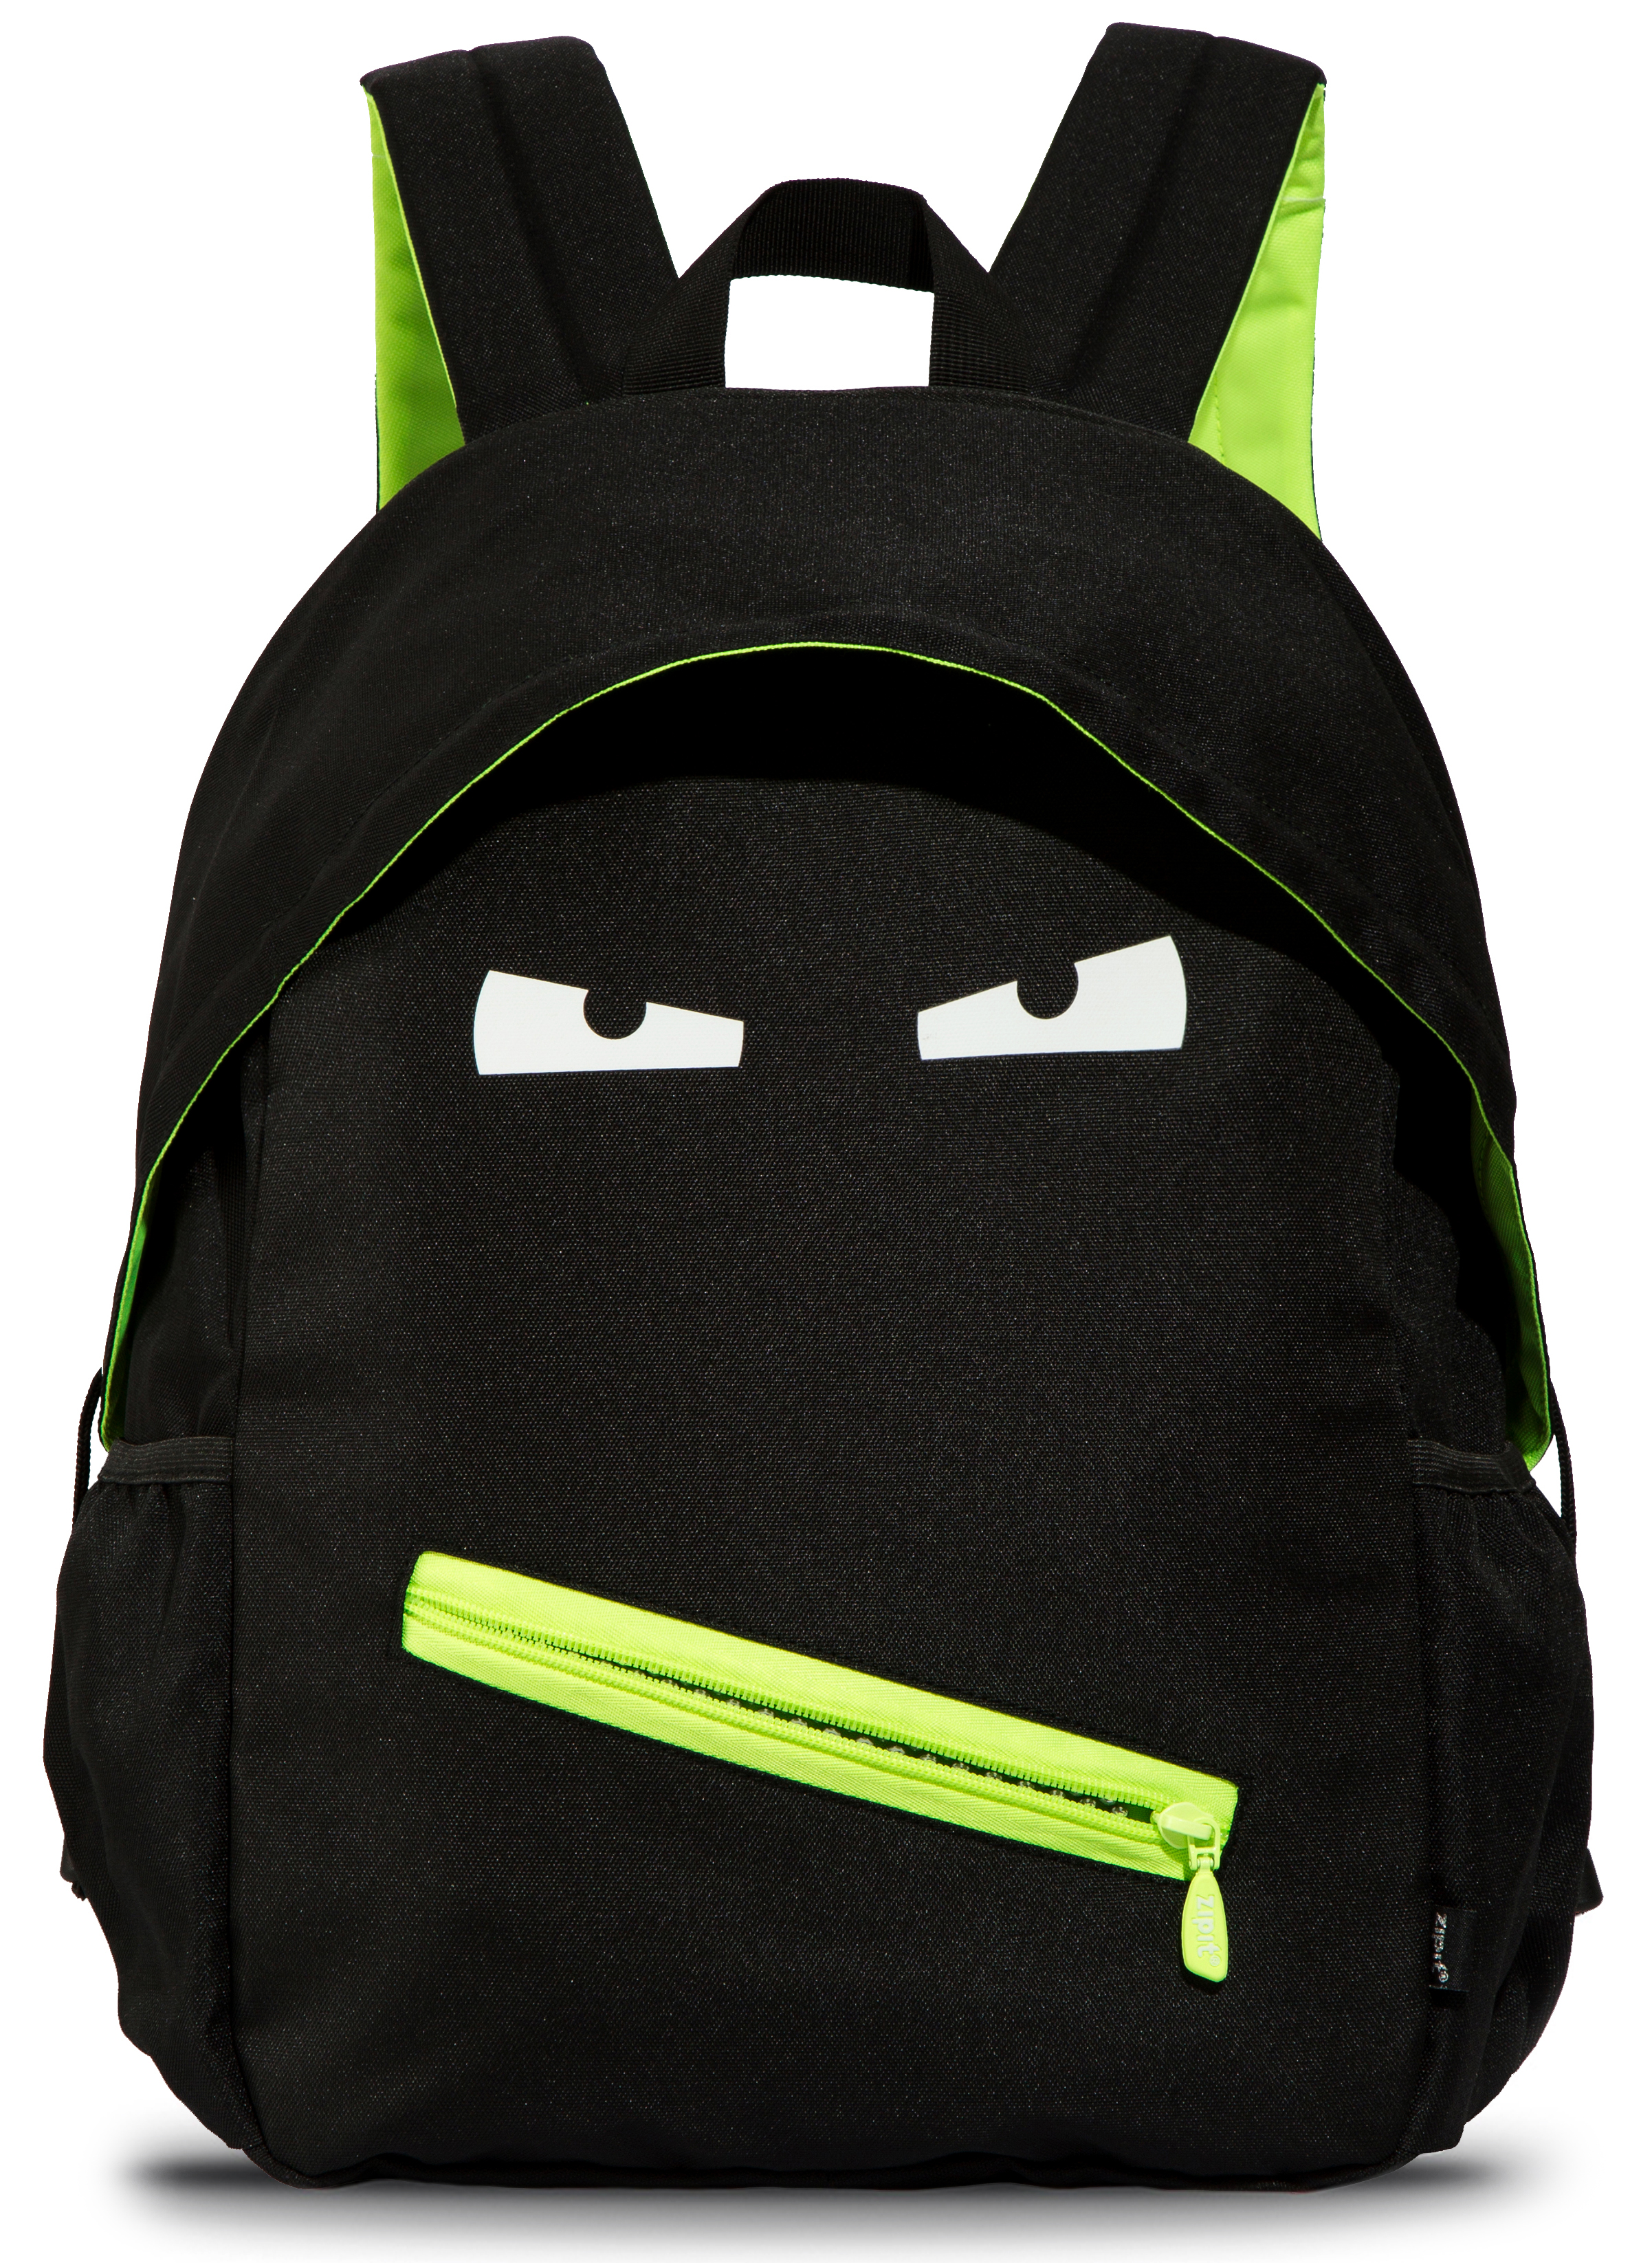 ZIPIT Grillz Backpack for Boys Elementary School & Preschool, Cute Book Bag for Kids (Black) - image 1 of 10